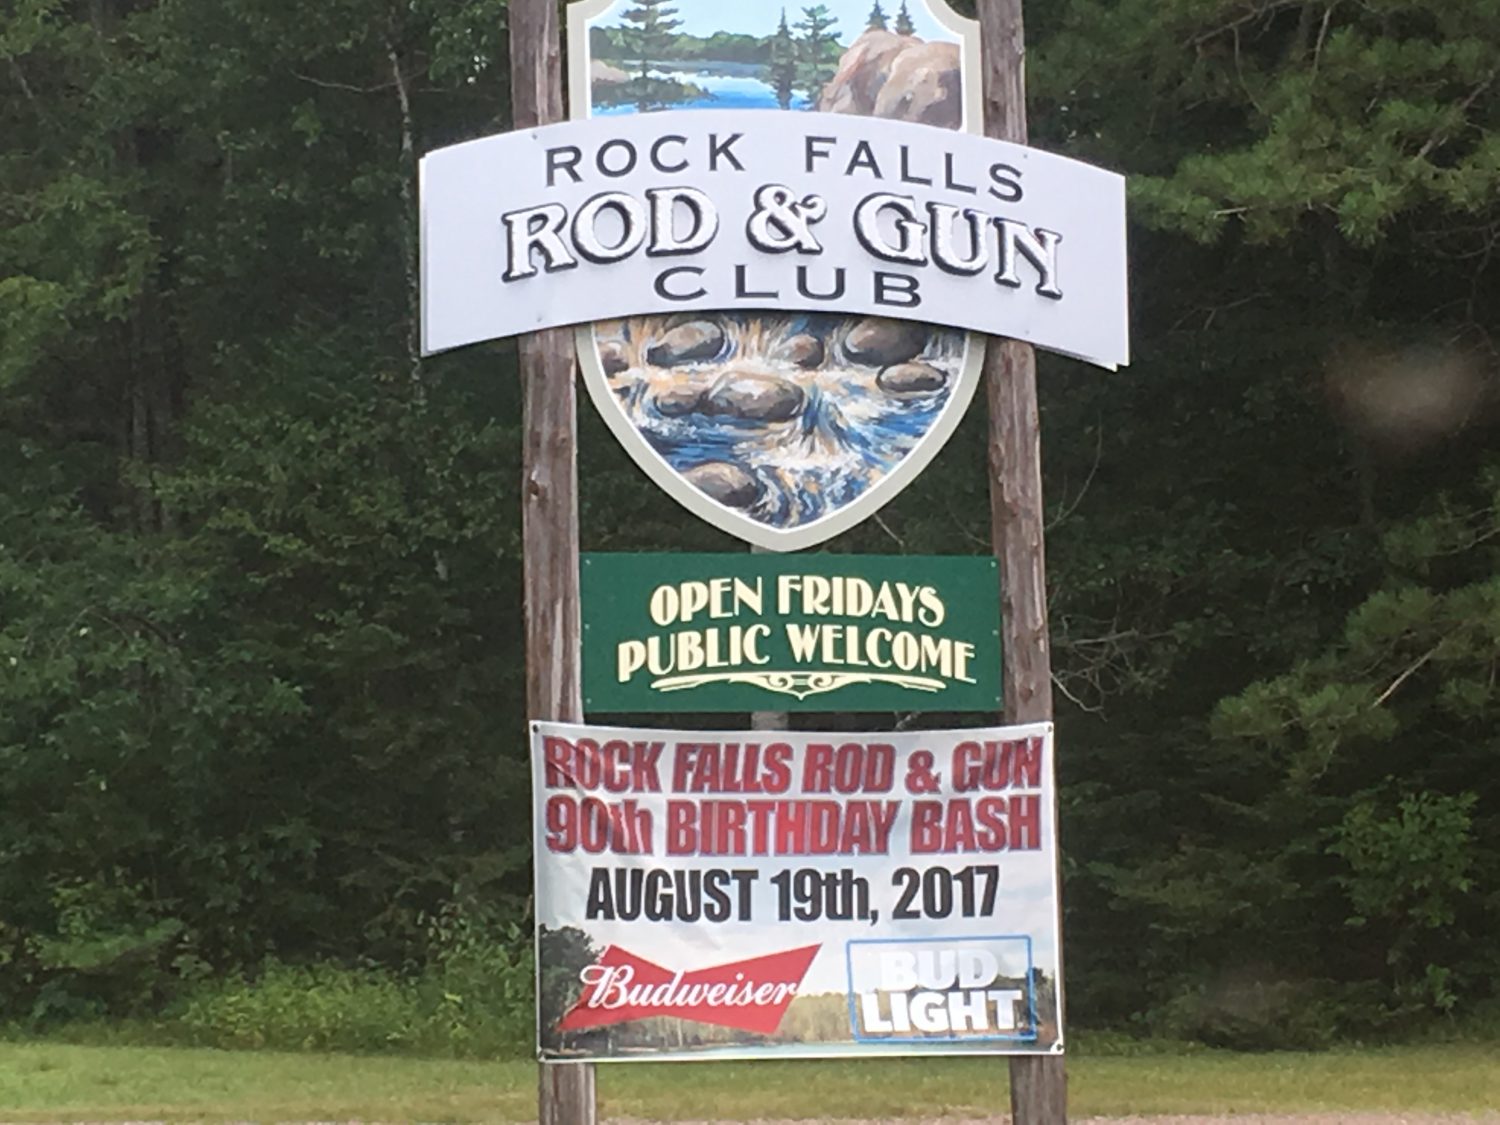 Rock Falls Rod & Gun Club 90th Birthday bash set for Saturday